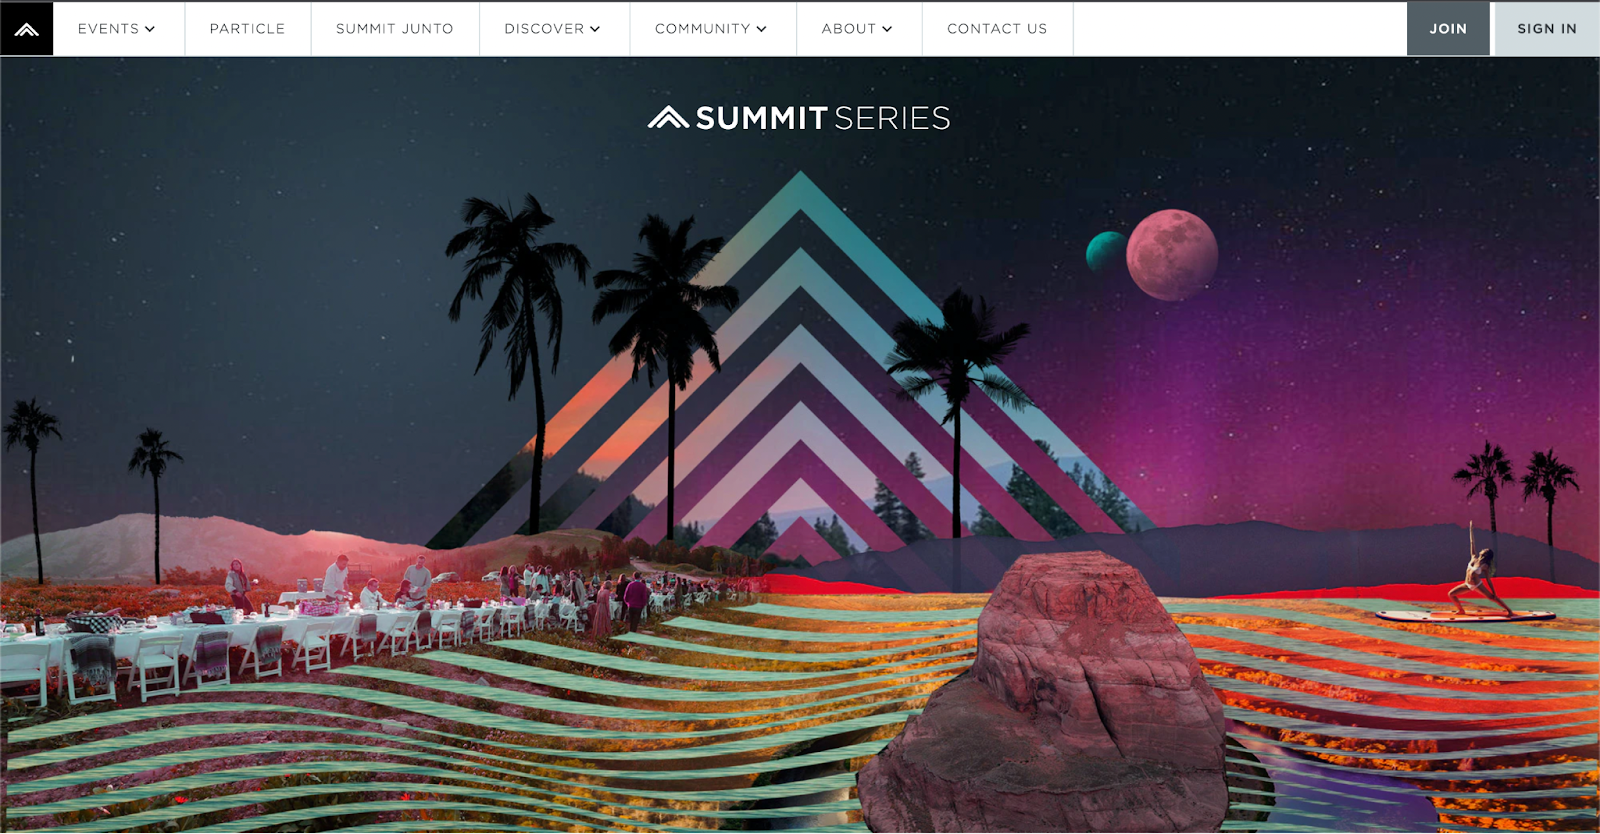 event website examples, summit series